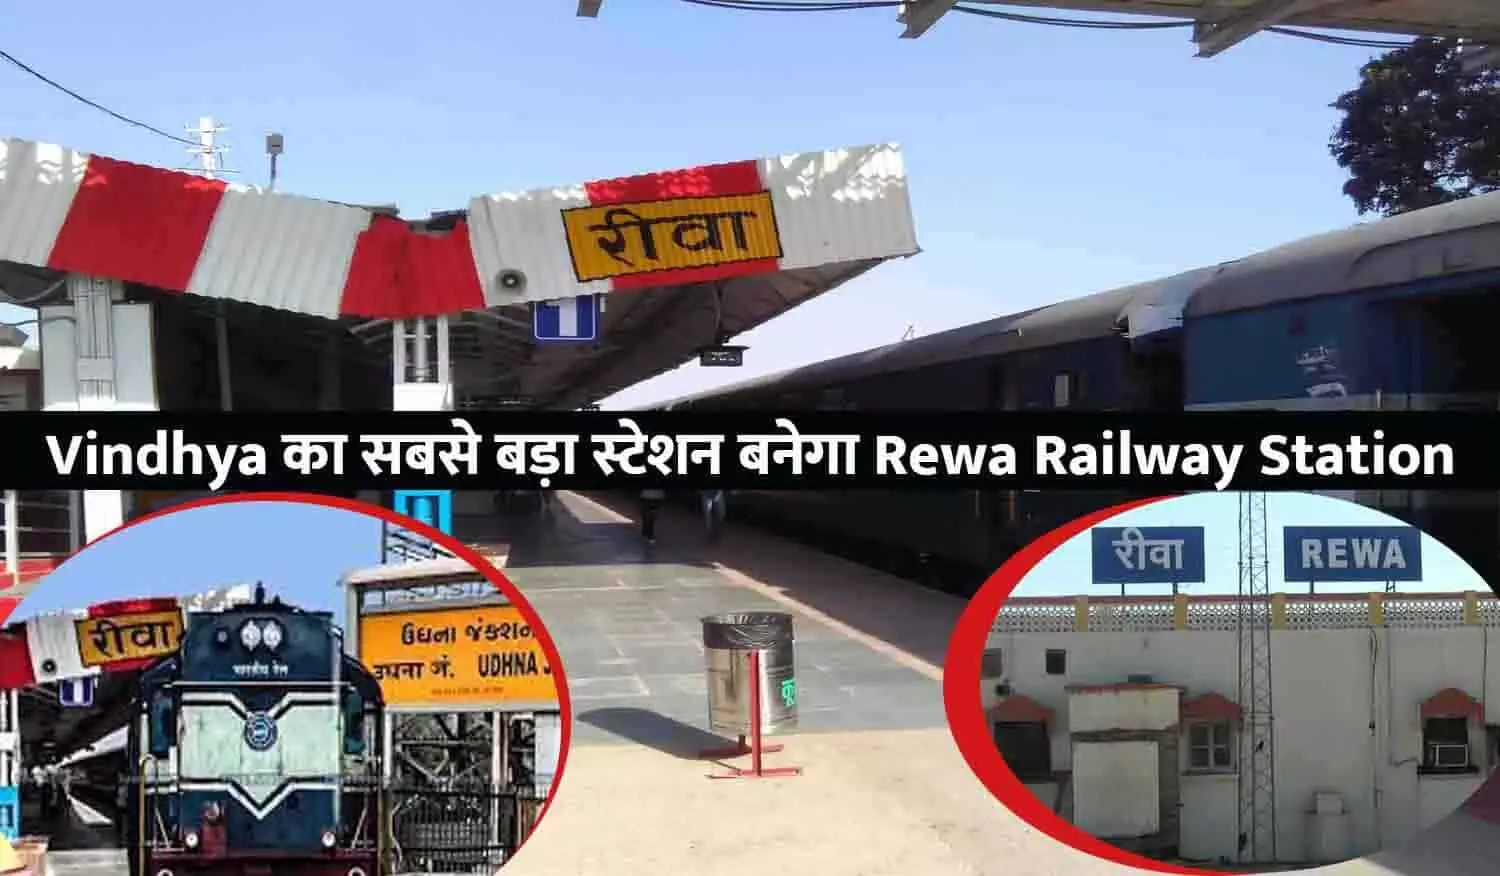 Rewa Railway Station